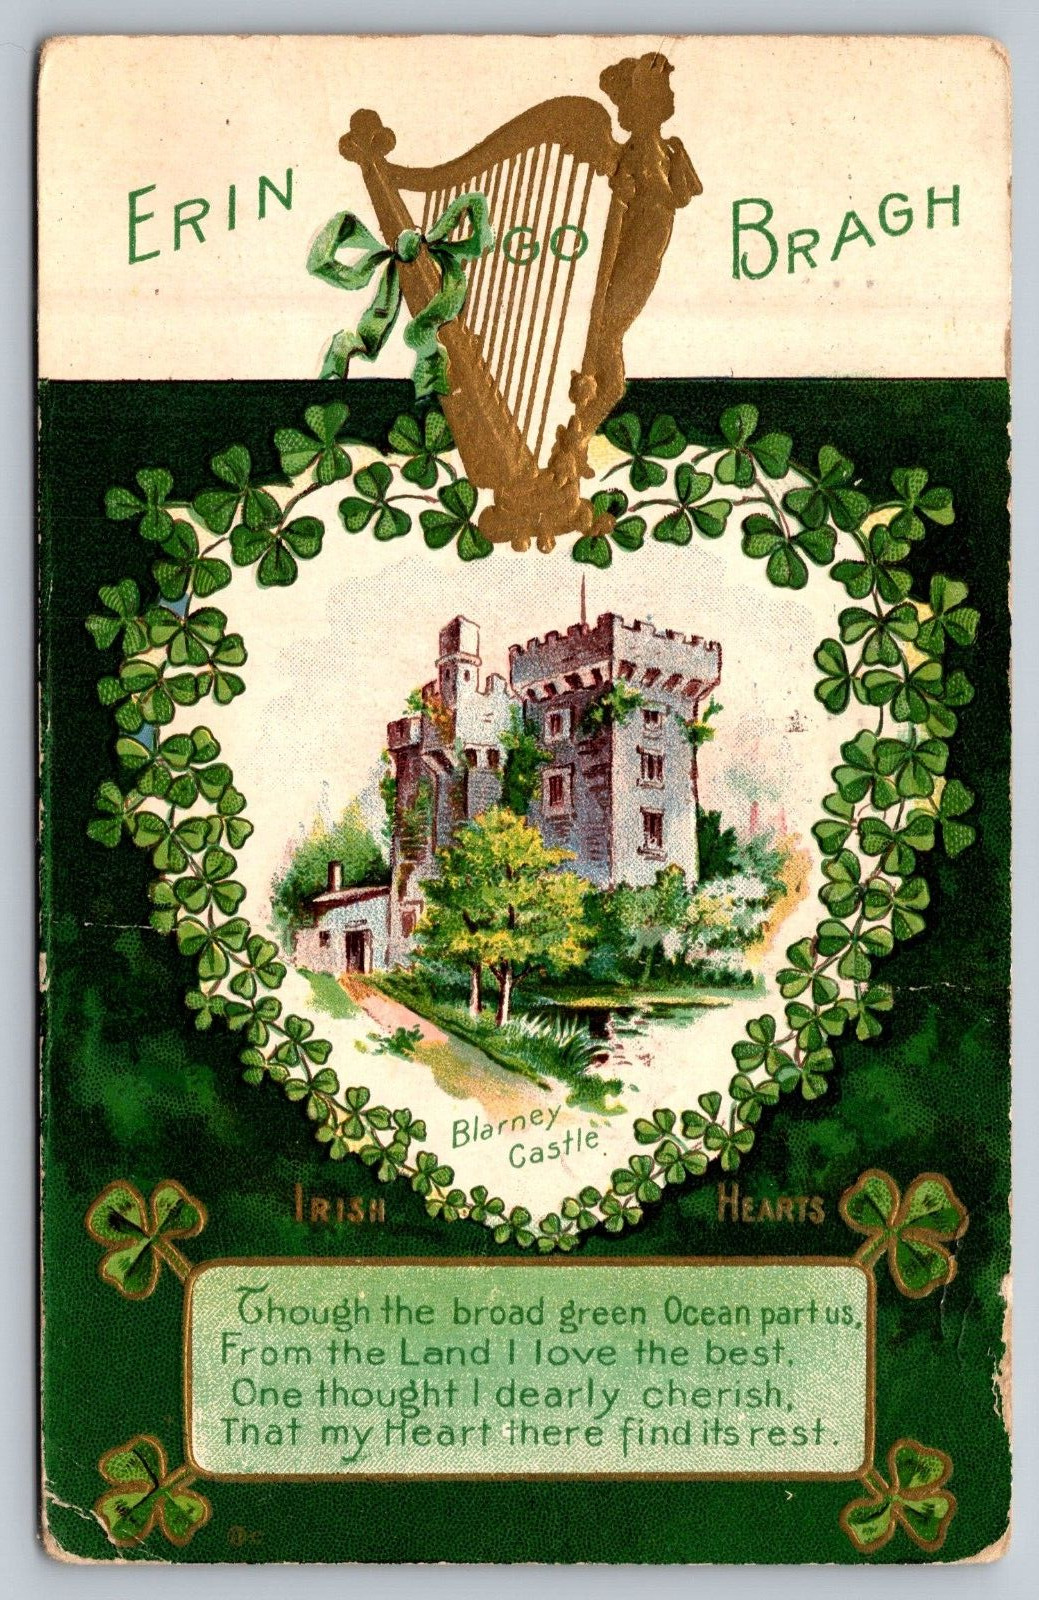 Antique St. Patrick's Day Postcard Featuring Irish Hearts, Harp, Blarney Castle